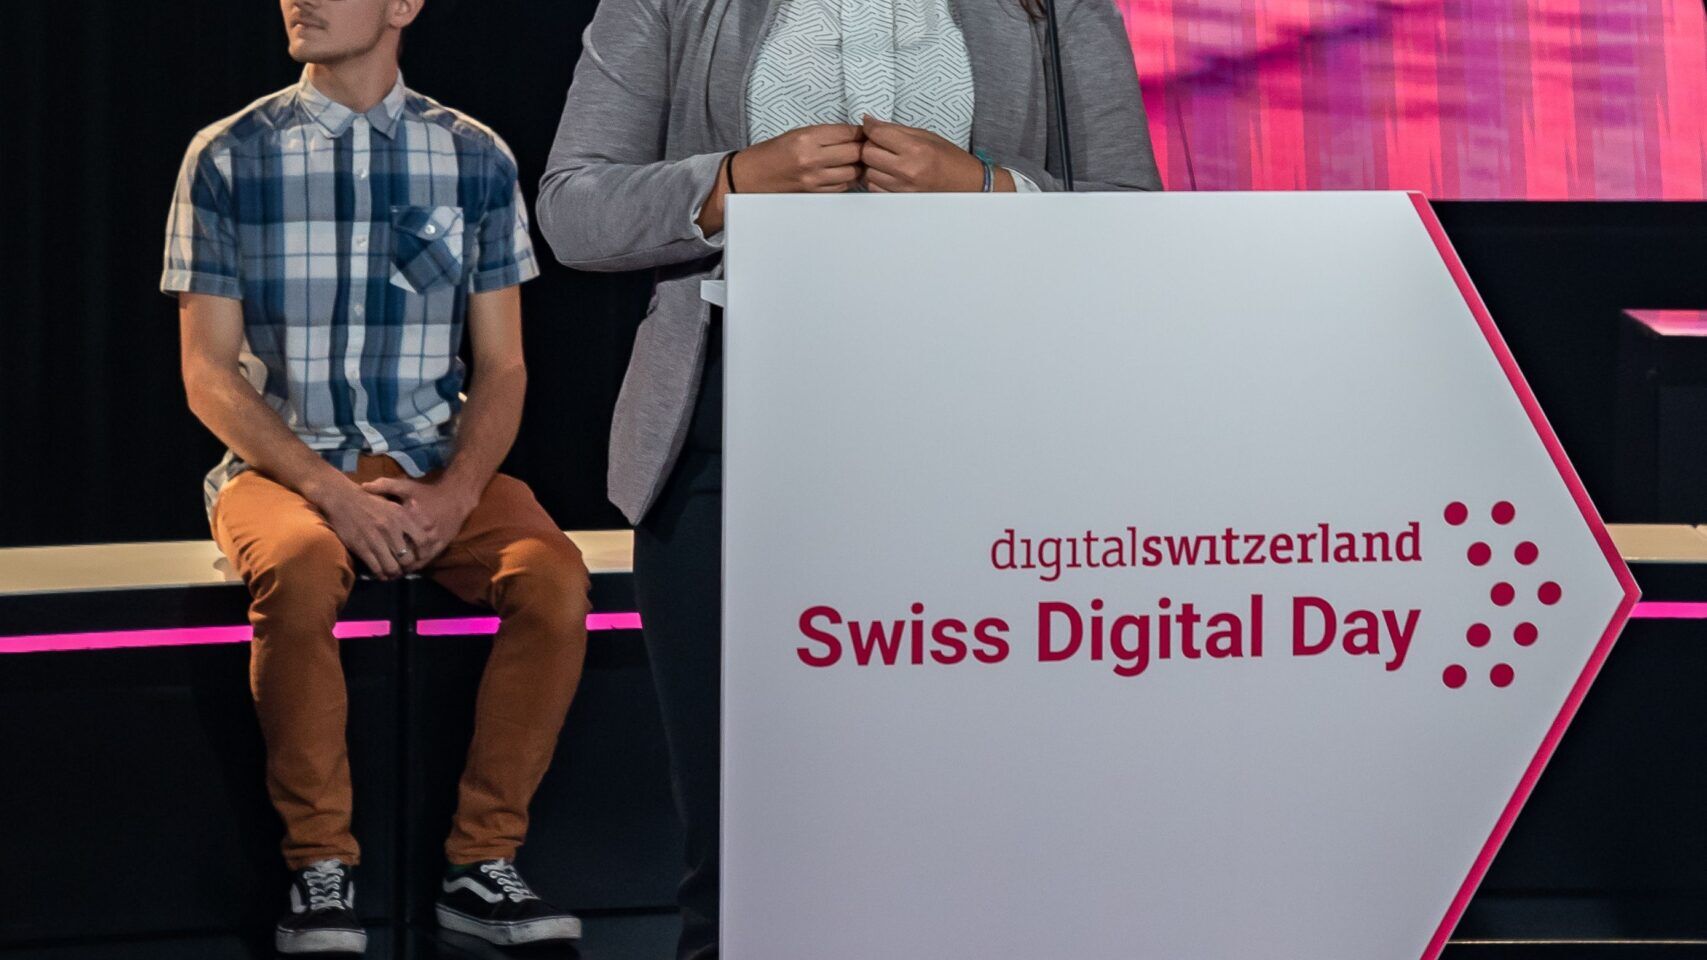 Flavia Wallenhorst è stata una finalista della graduatoria “NextGen Hero” ai “Digital Economy Award” 2021